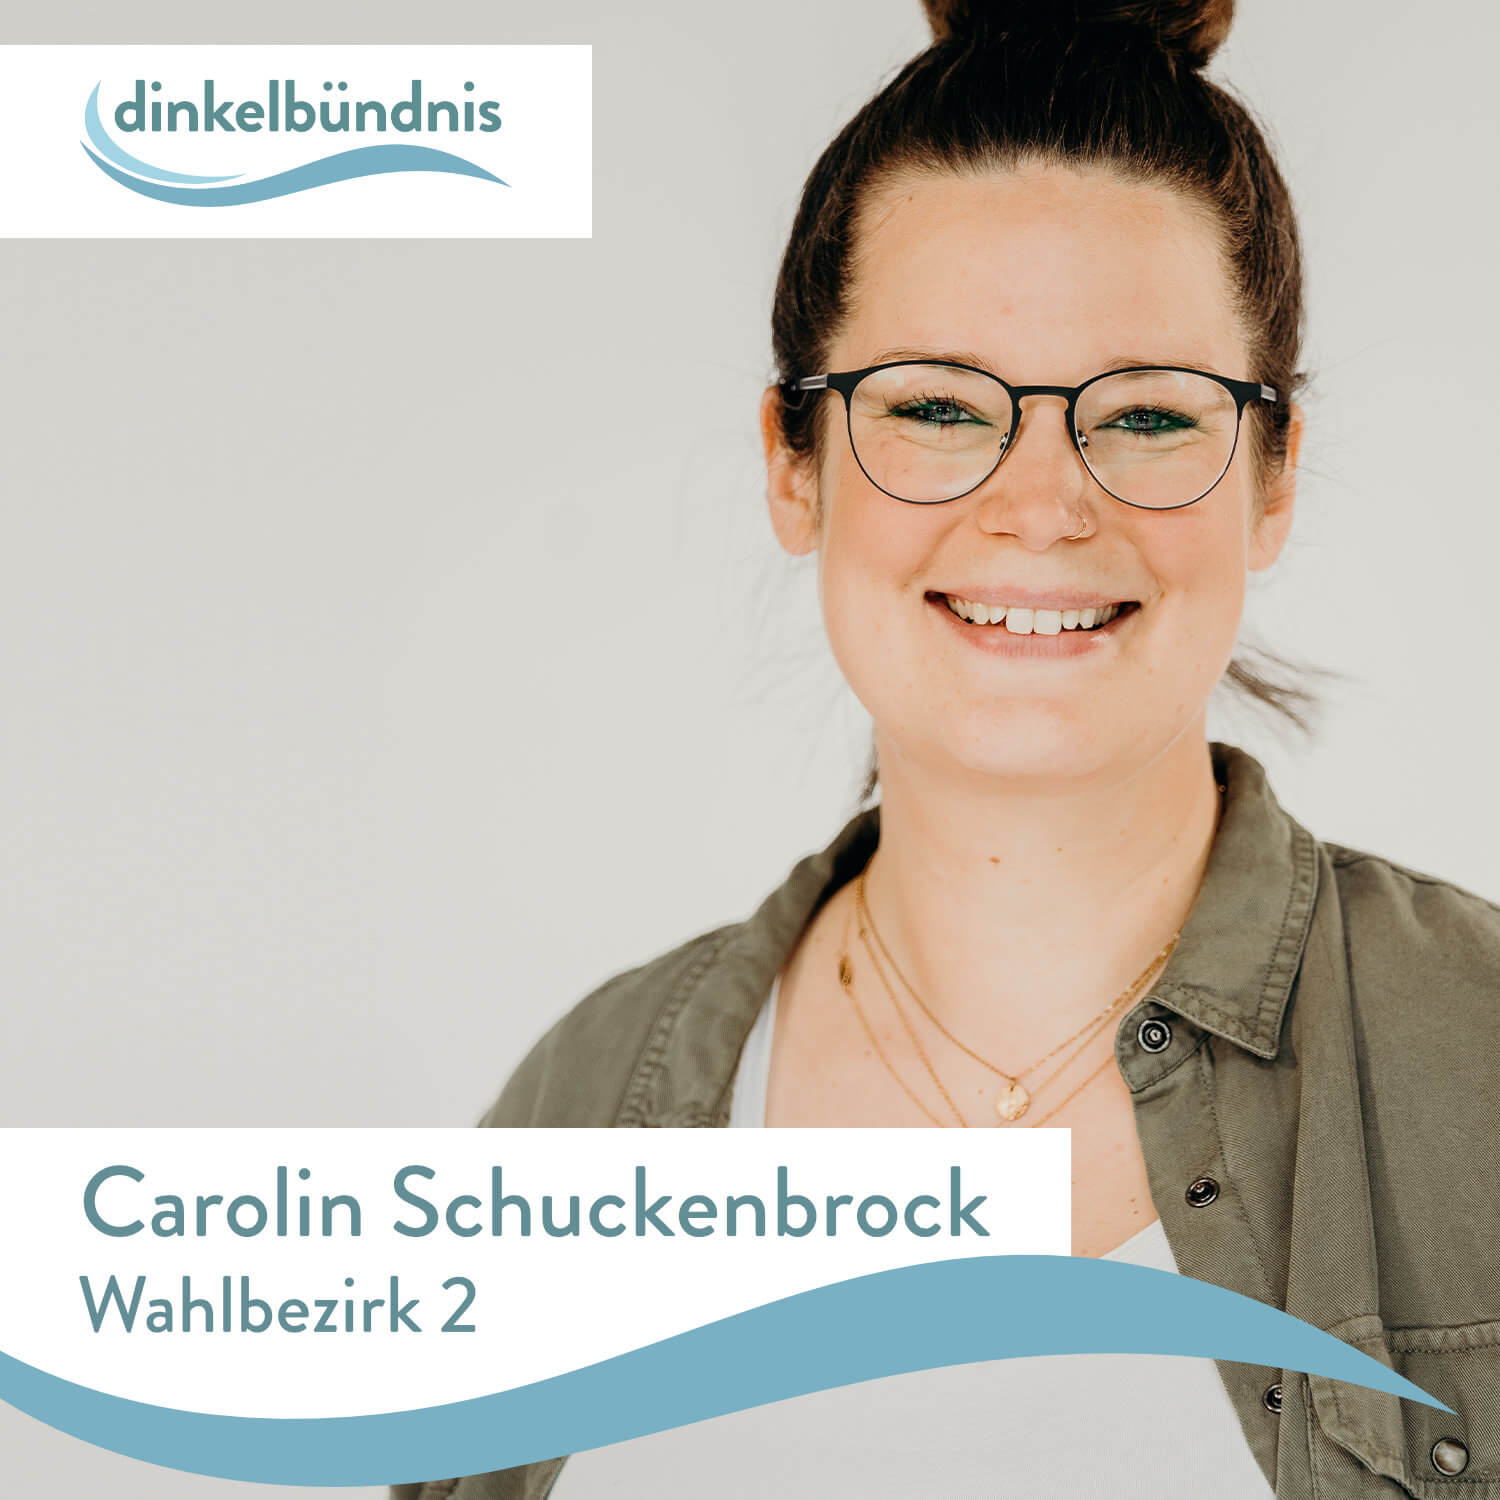 Schuckenbrock, Carolin (Dinkelbündnis)